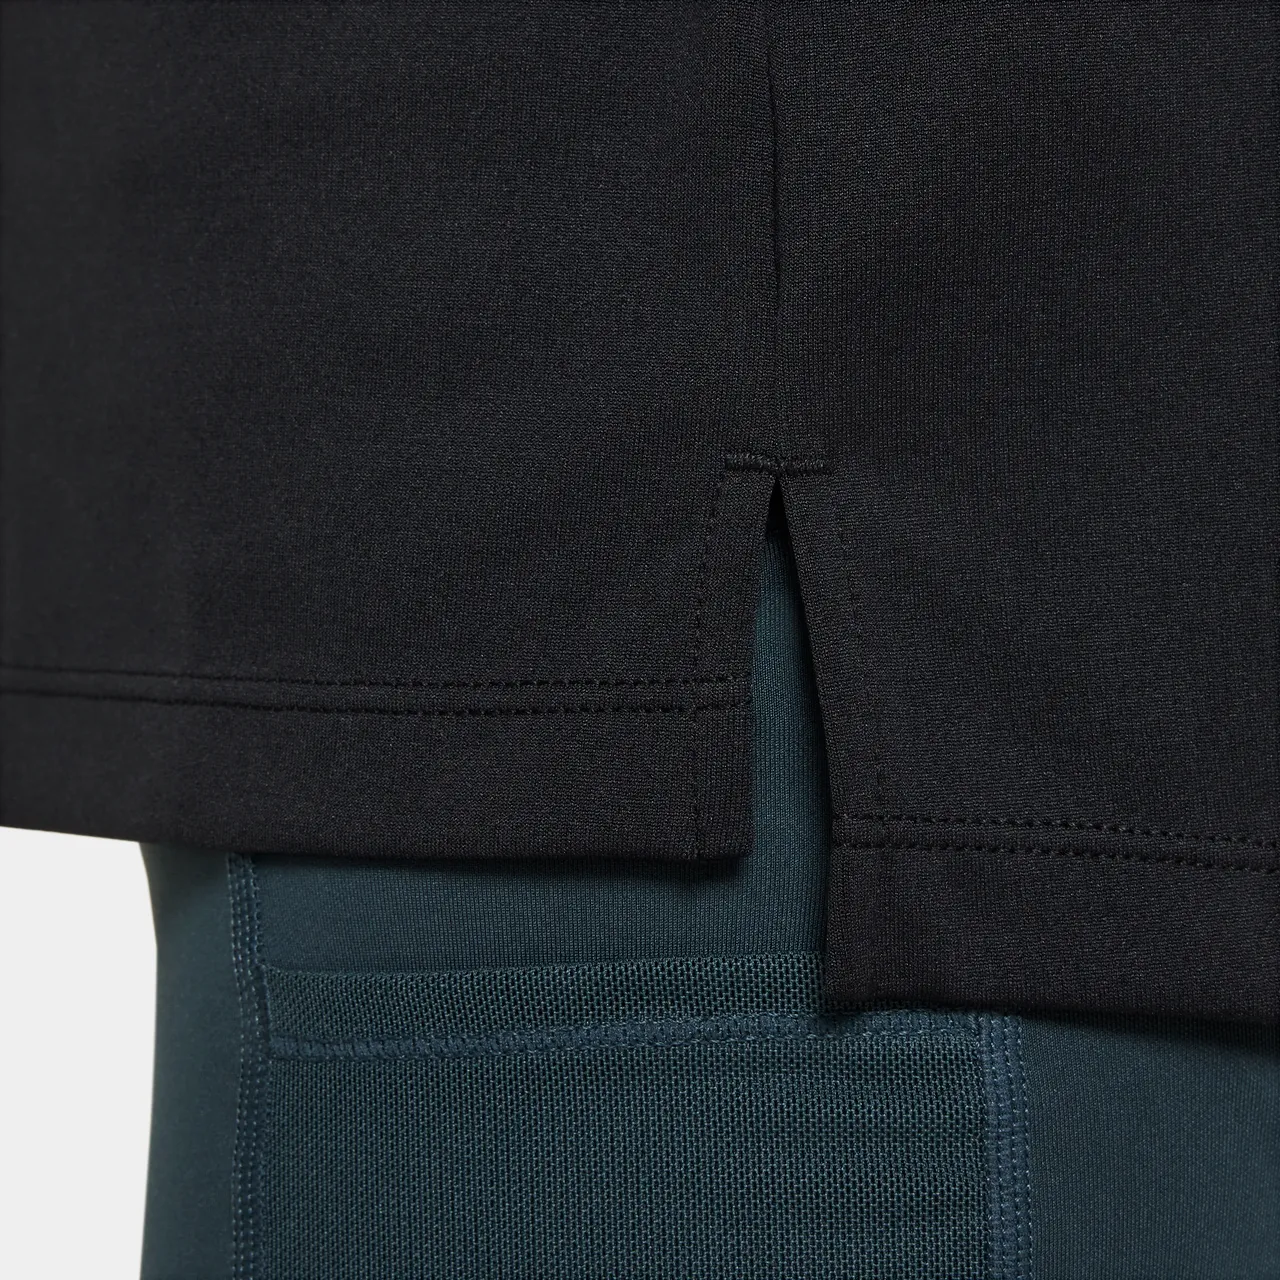 Nike Pro Girls' Dri-FIT Long-Sleeve 1/2-Zip Top - Black - Polyester